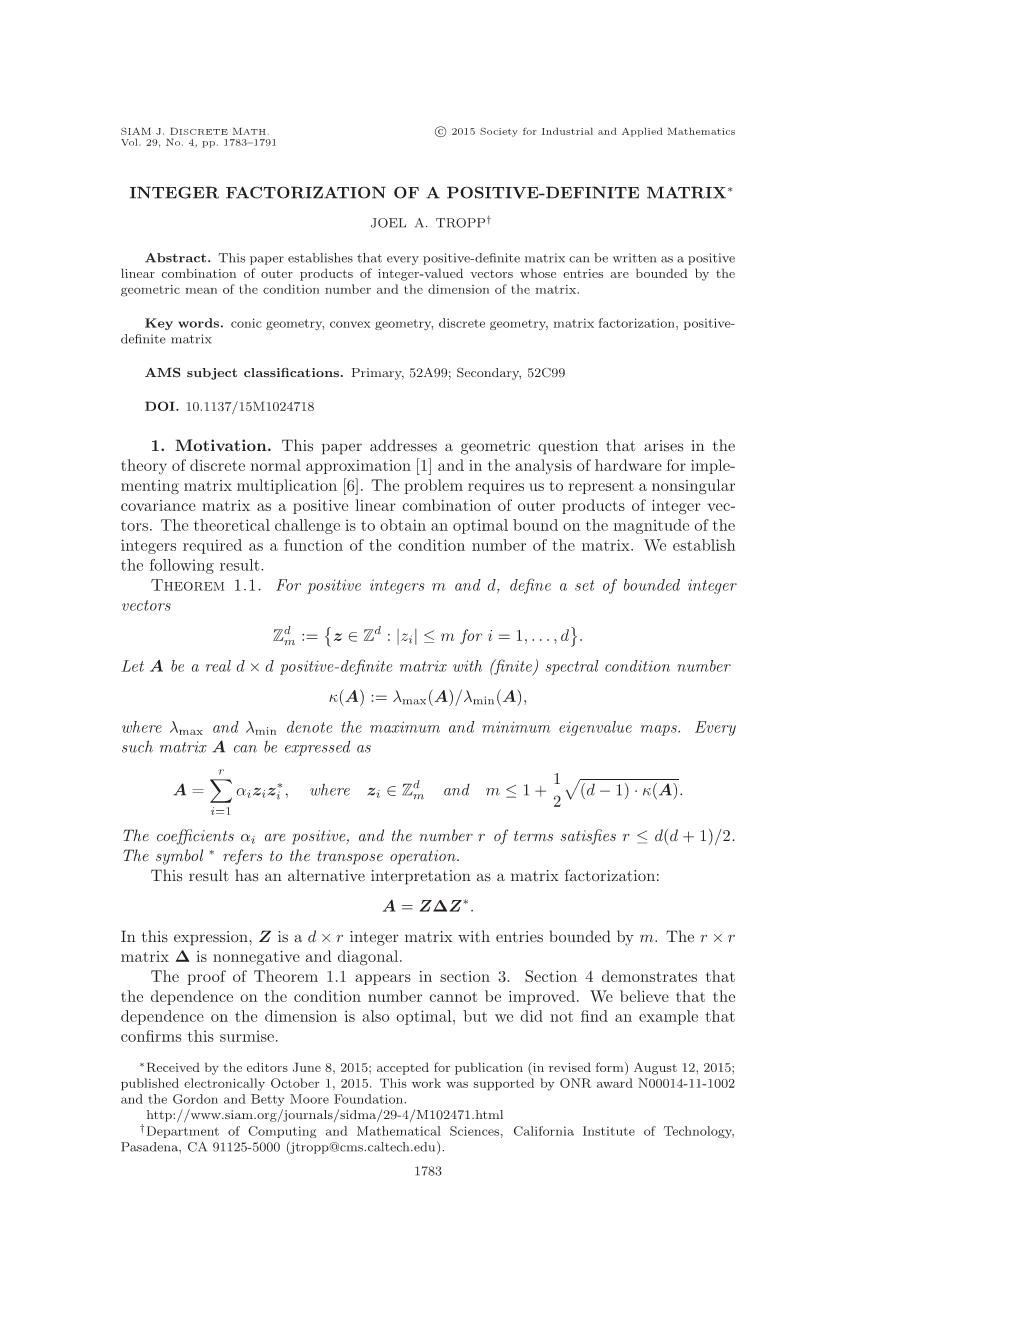 INTEGER FACTORIZATION of a POSITIVE-DEFINITE MATRIX 1. Motivation. This Paper Addresses a Geometric Question That Arises In